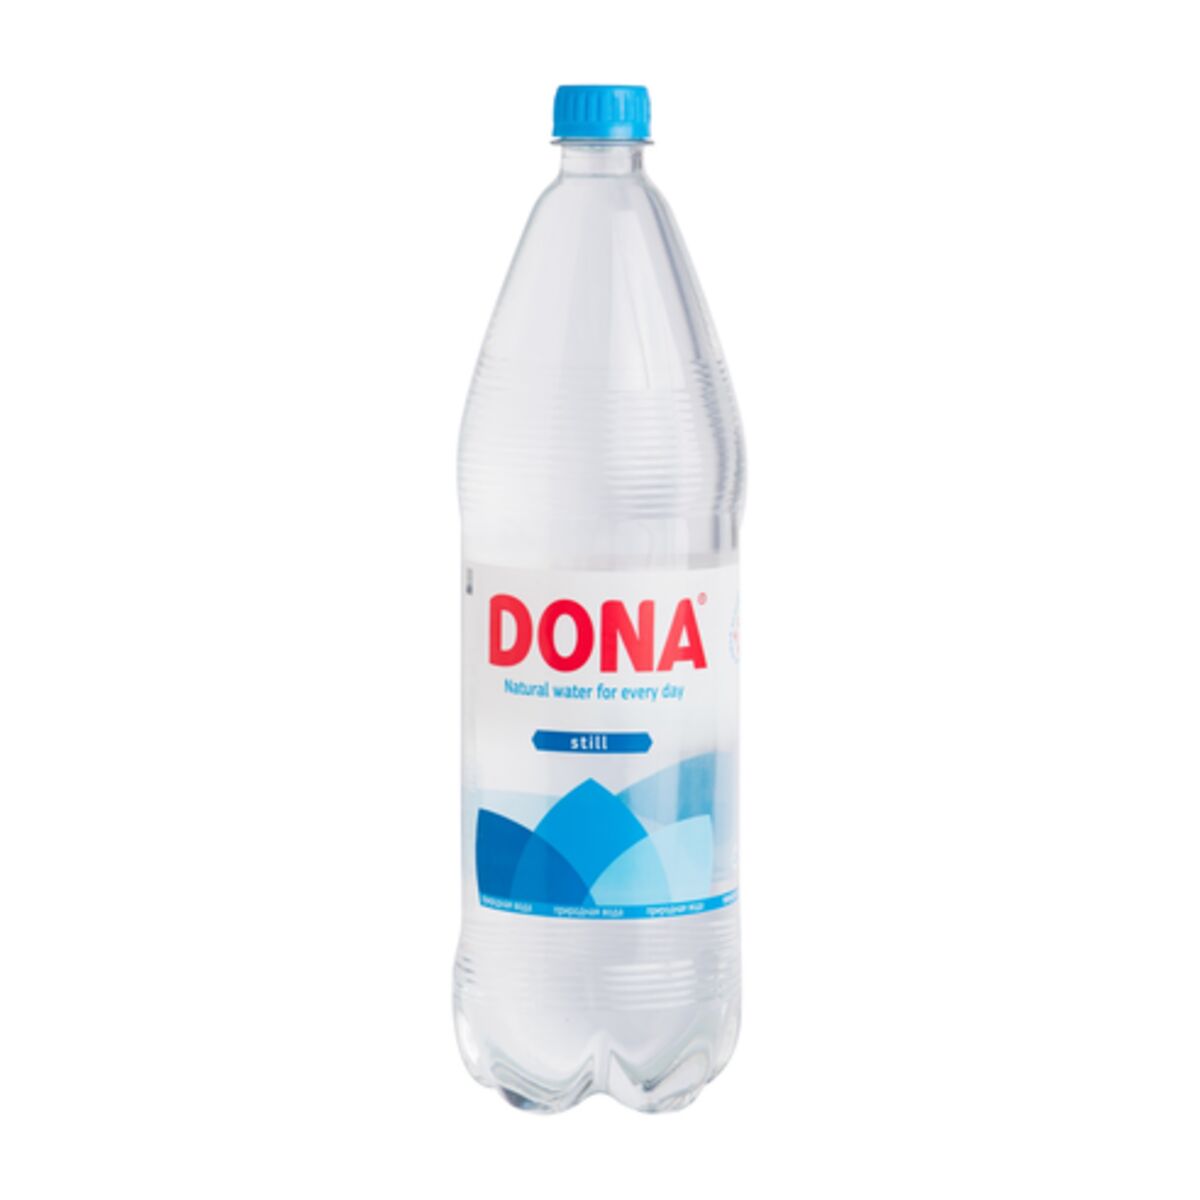 Дона вода волгоград. Дона вода. Вода Дона Волгоград. Вода Донская. Дона вода логотип.